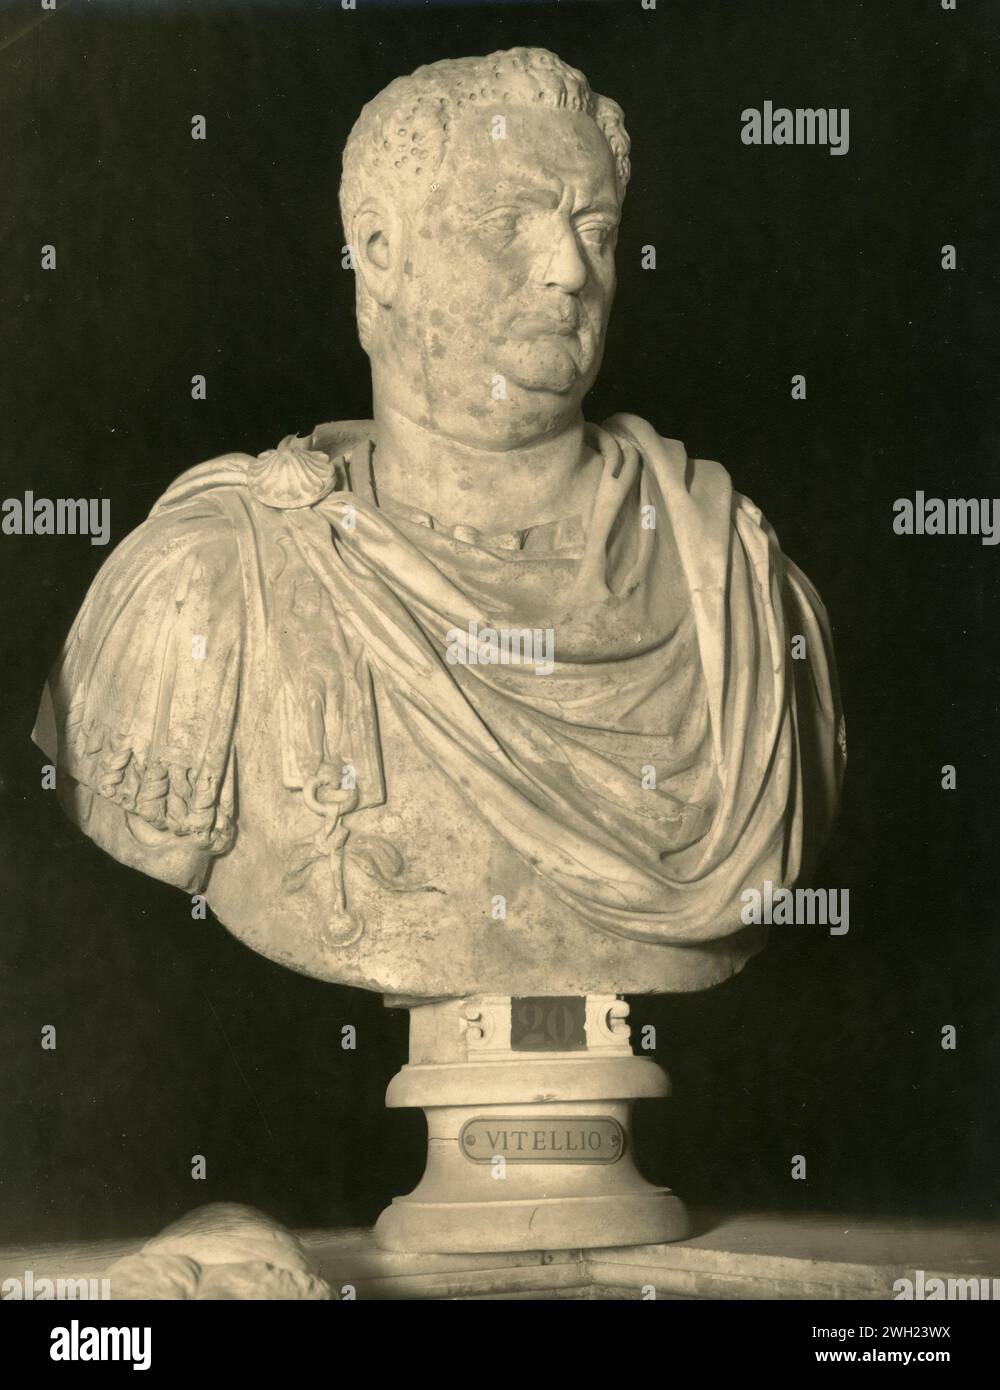 Ancient marble bust statue of Roman Emperor Vitellius, Capitoline Museum, Italy 1900s Stock Photo